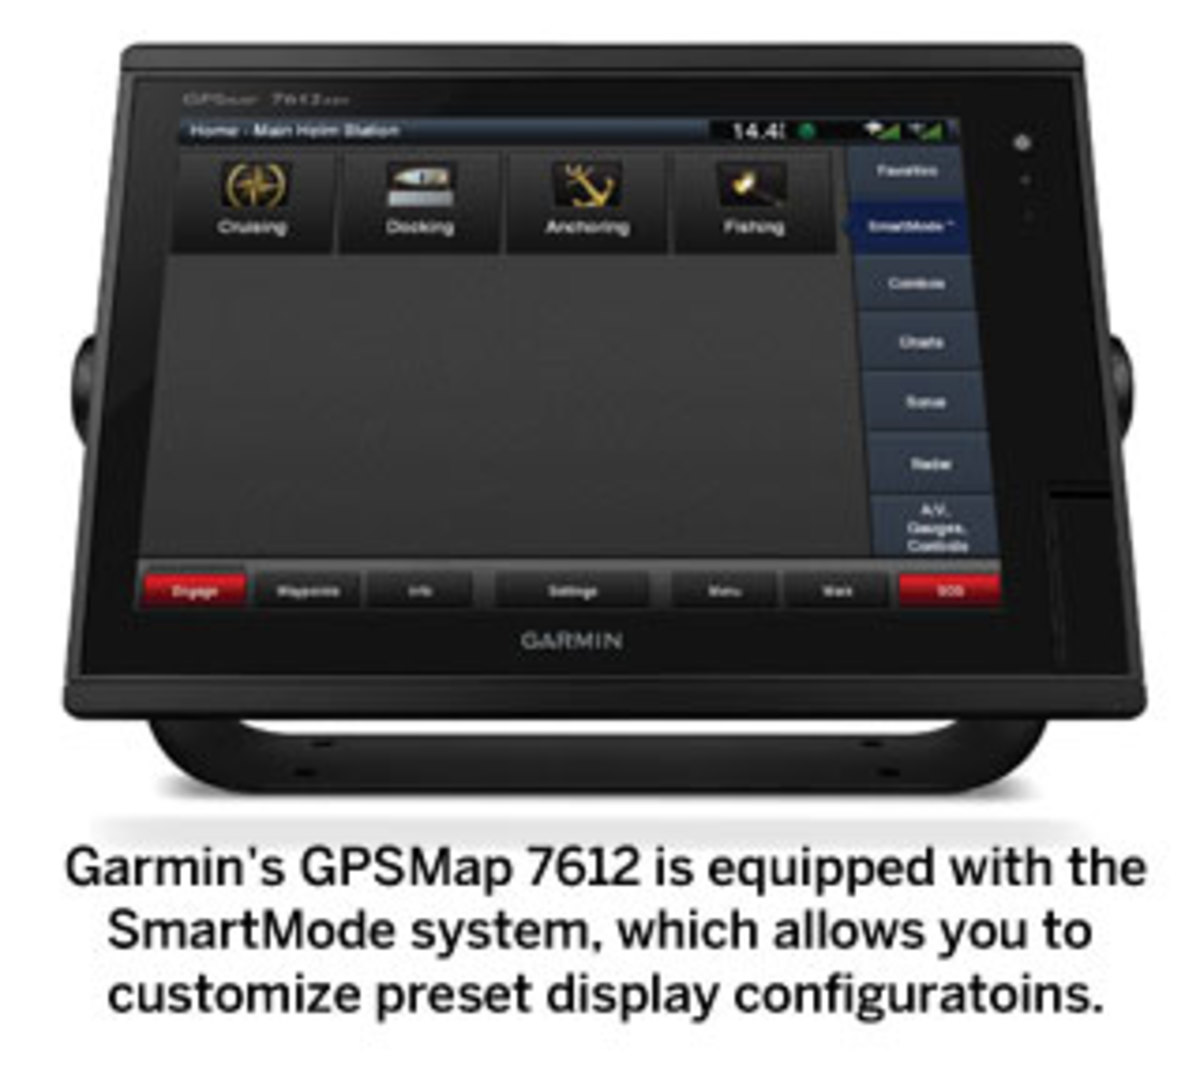 GPSMap 7612 from Garmin